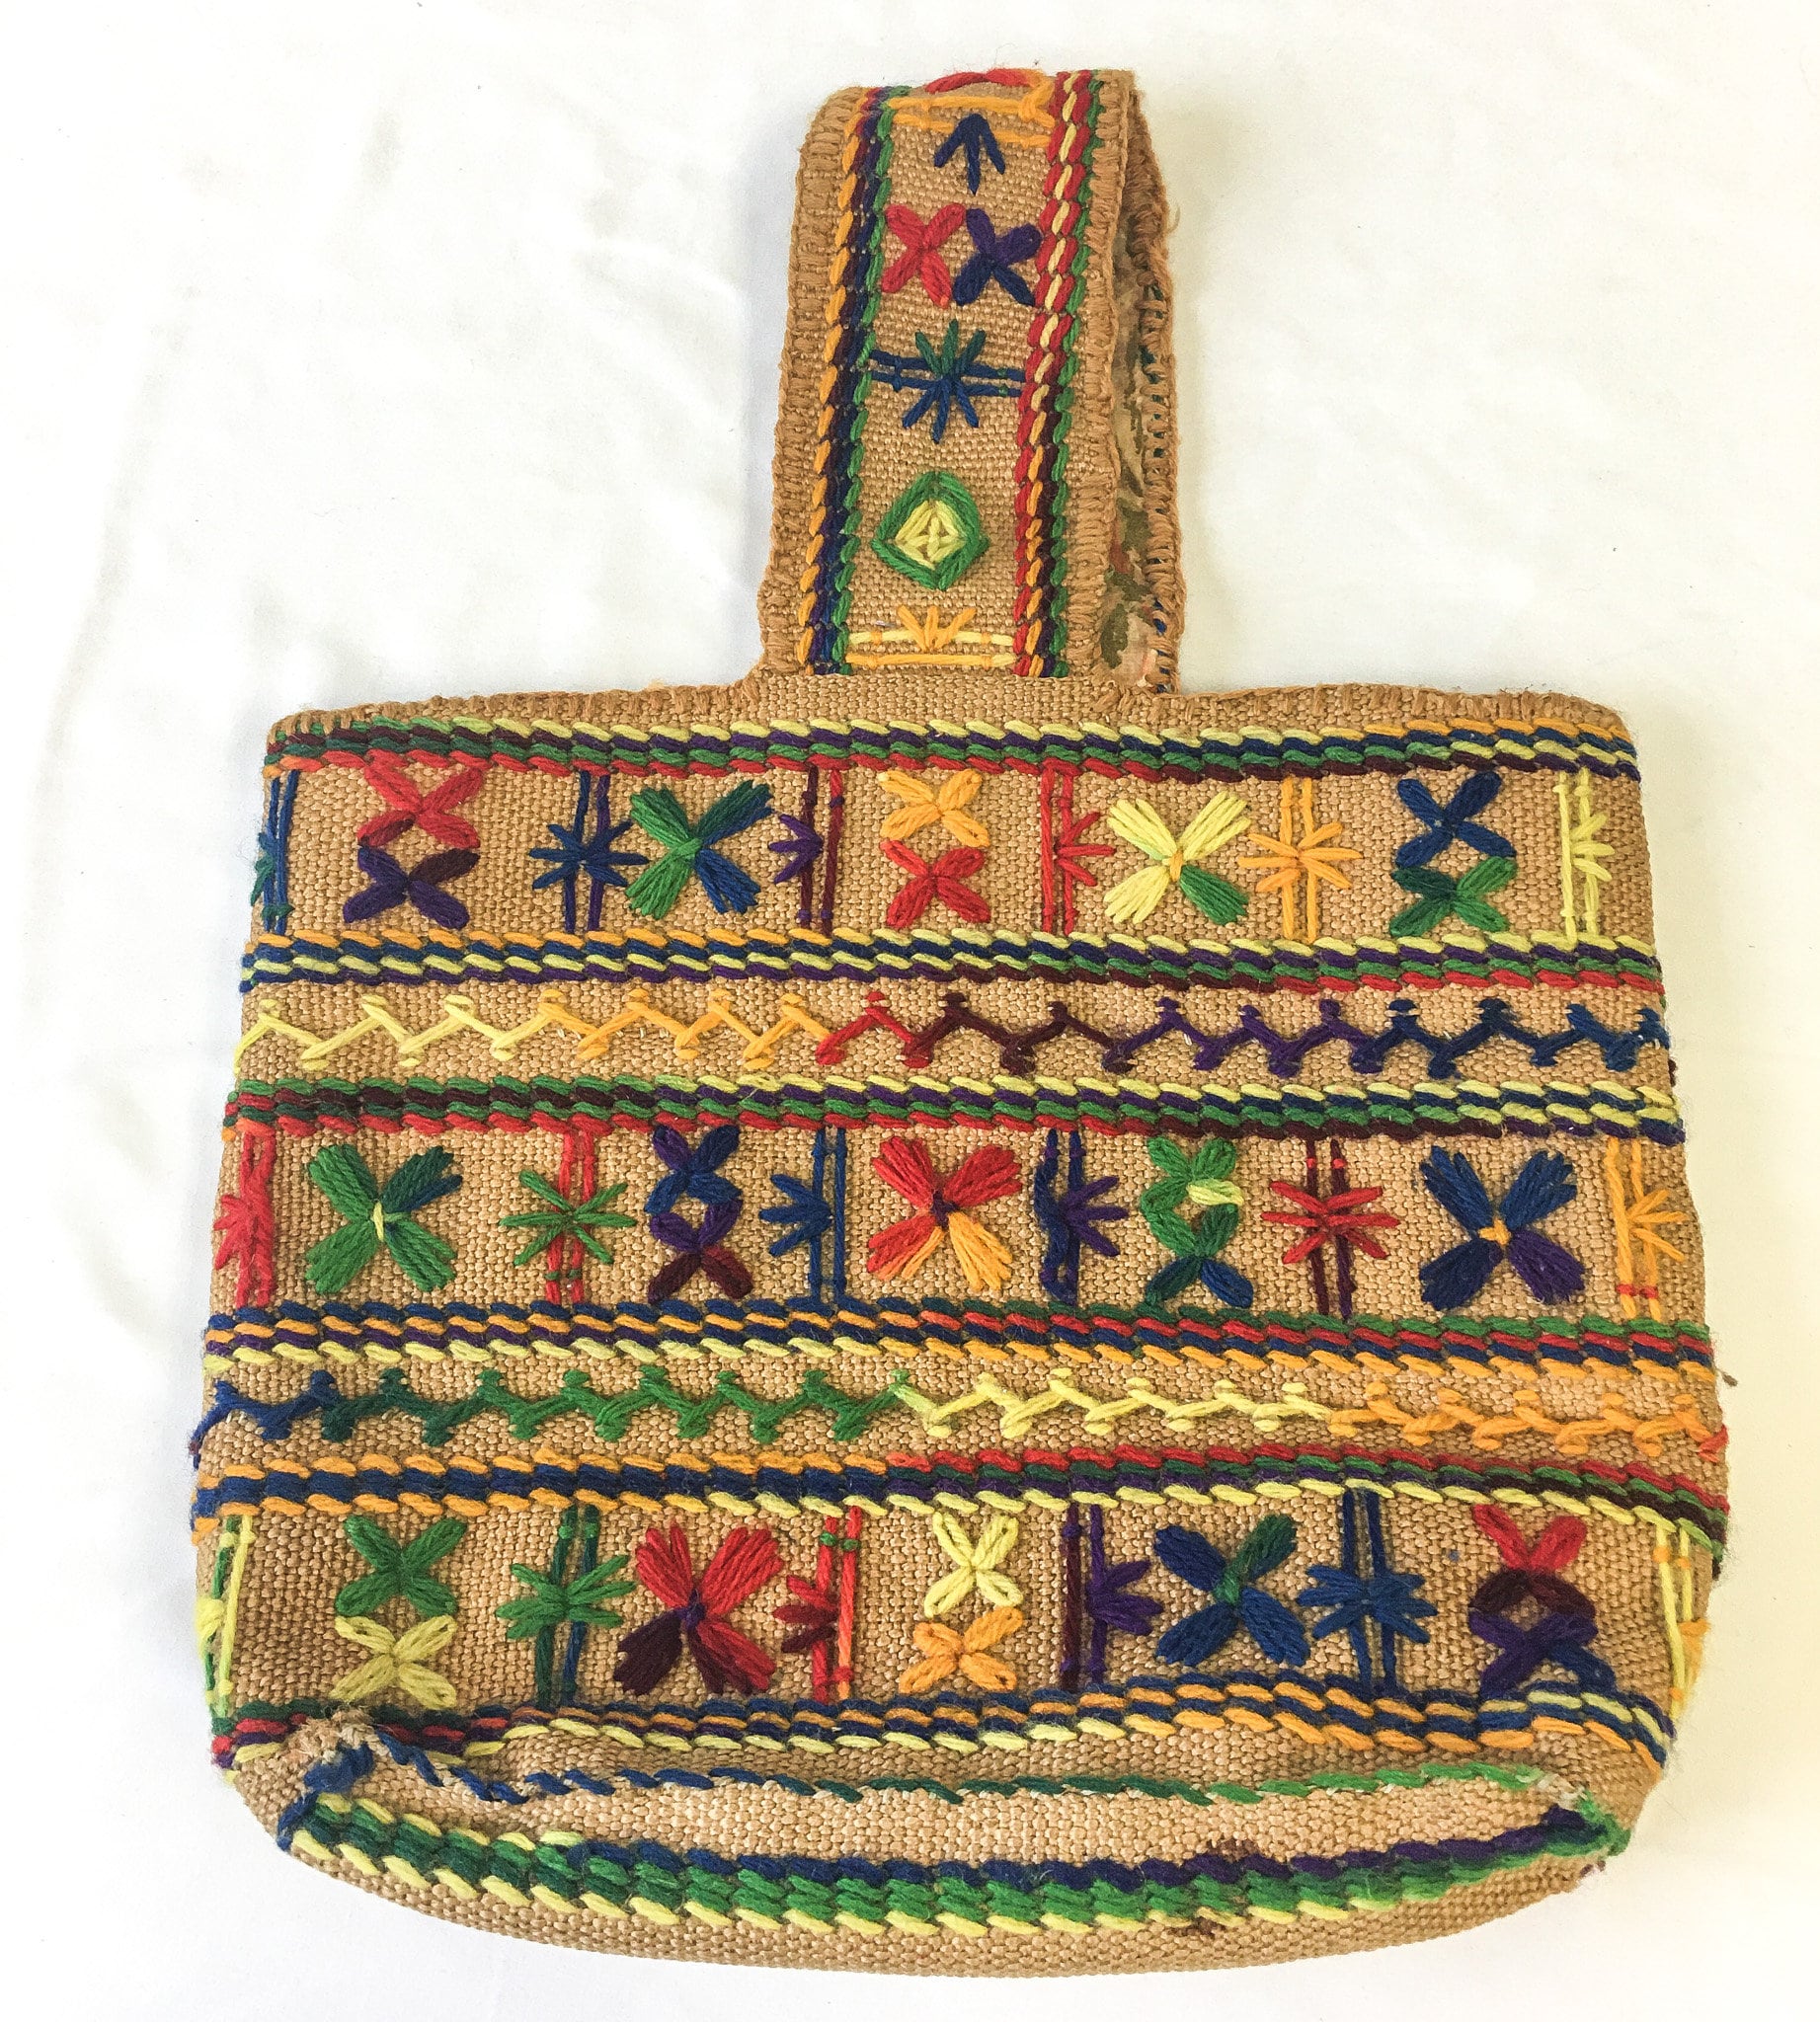 Vintage 70s Handcrafted Rainbow Needlepoint Burlap Crewel Top Tote Bag, 70s Boho Handbag